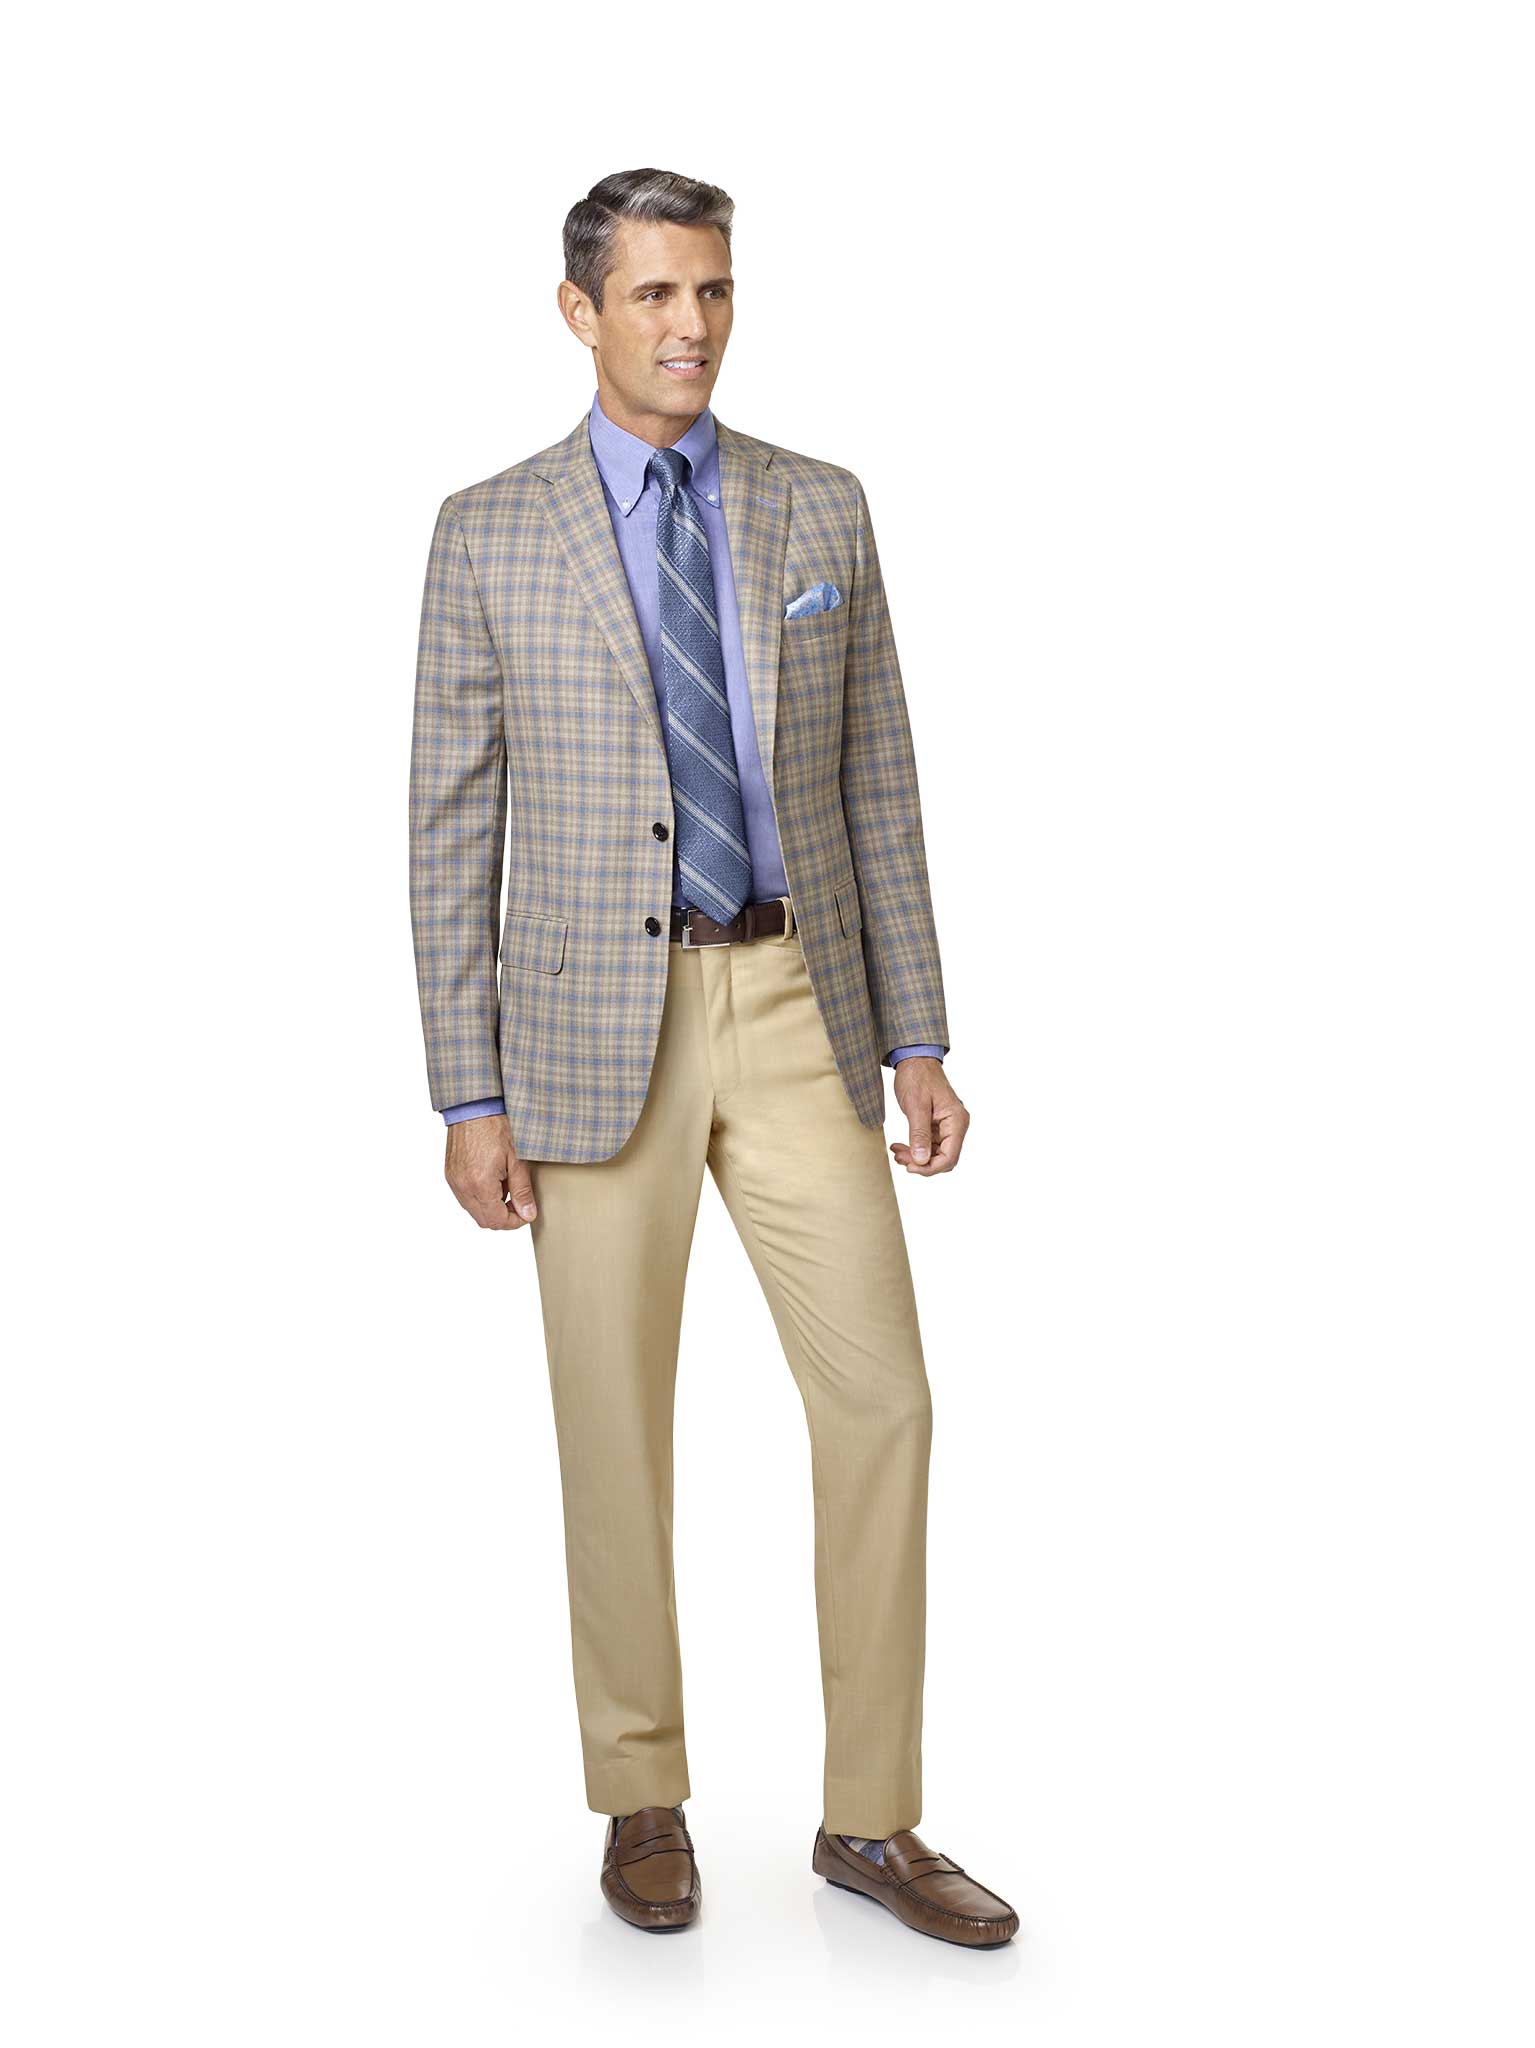 Men's Custom Clothing                                                                                                                                                                                                                                     , Tan & Beige Windowpane Check Sport Coat